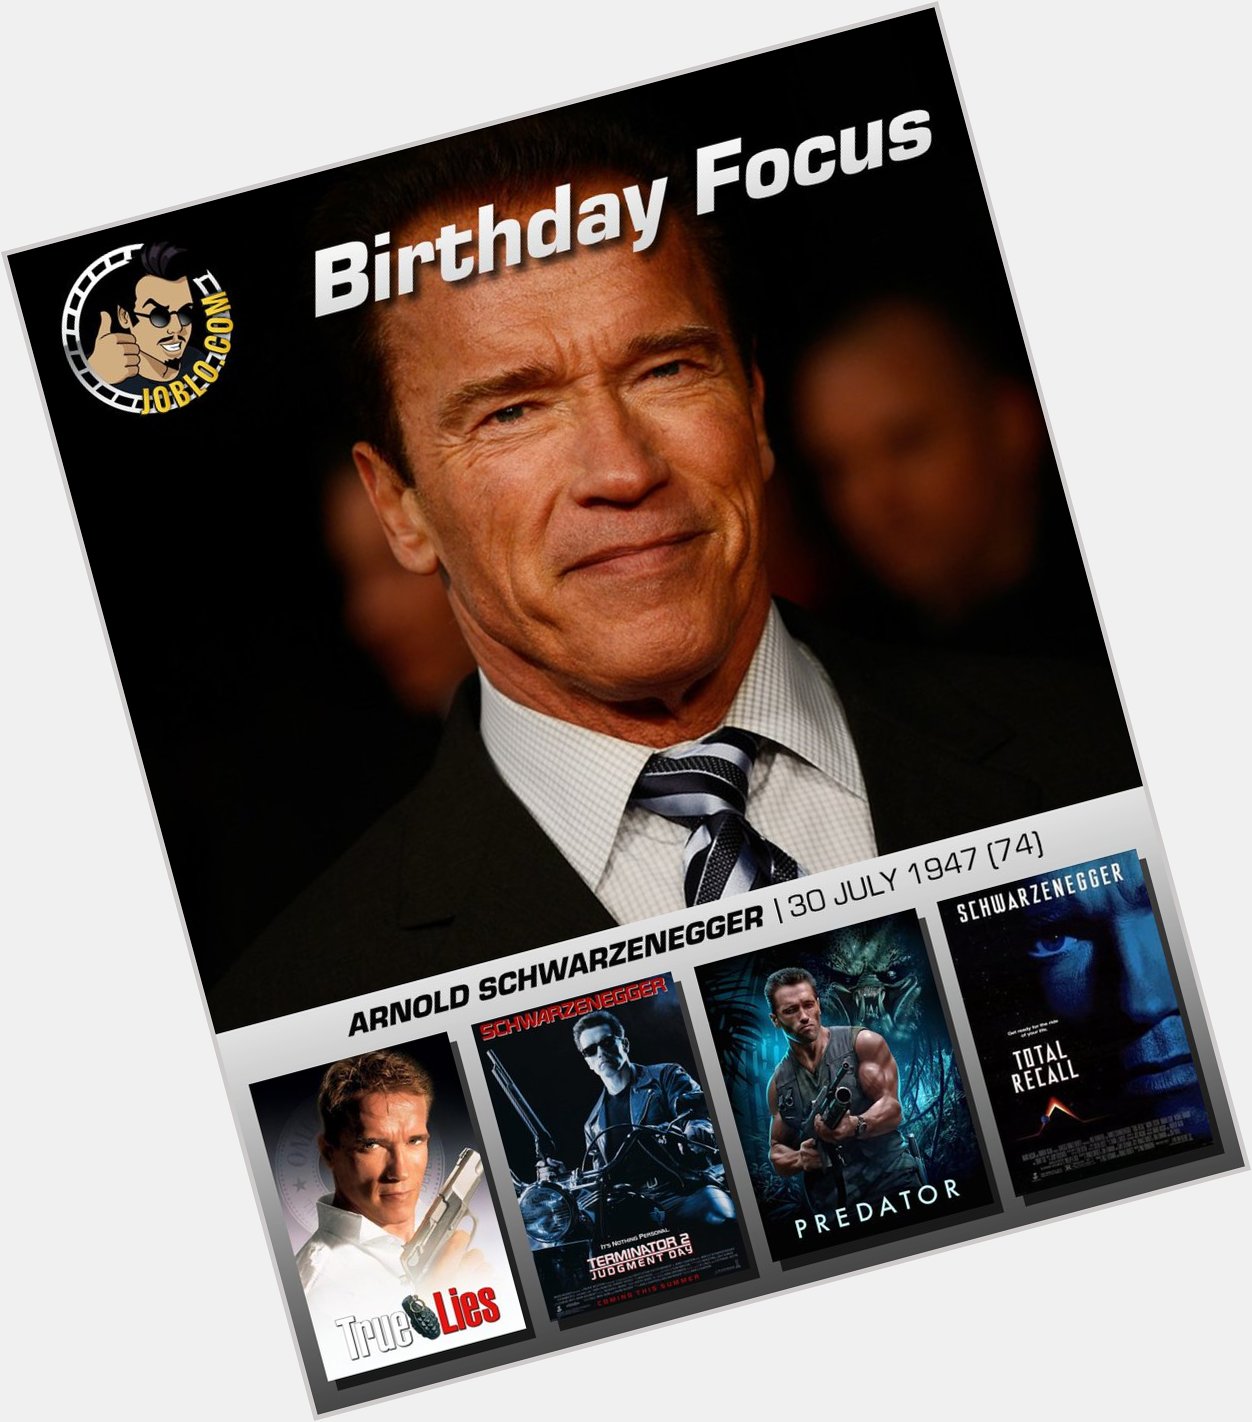 Wishing Arnold Schwarzenegger a very happy 74th birthday! 